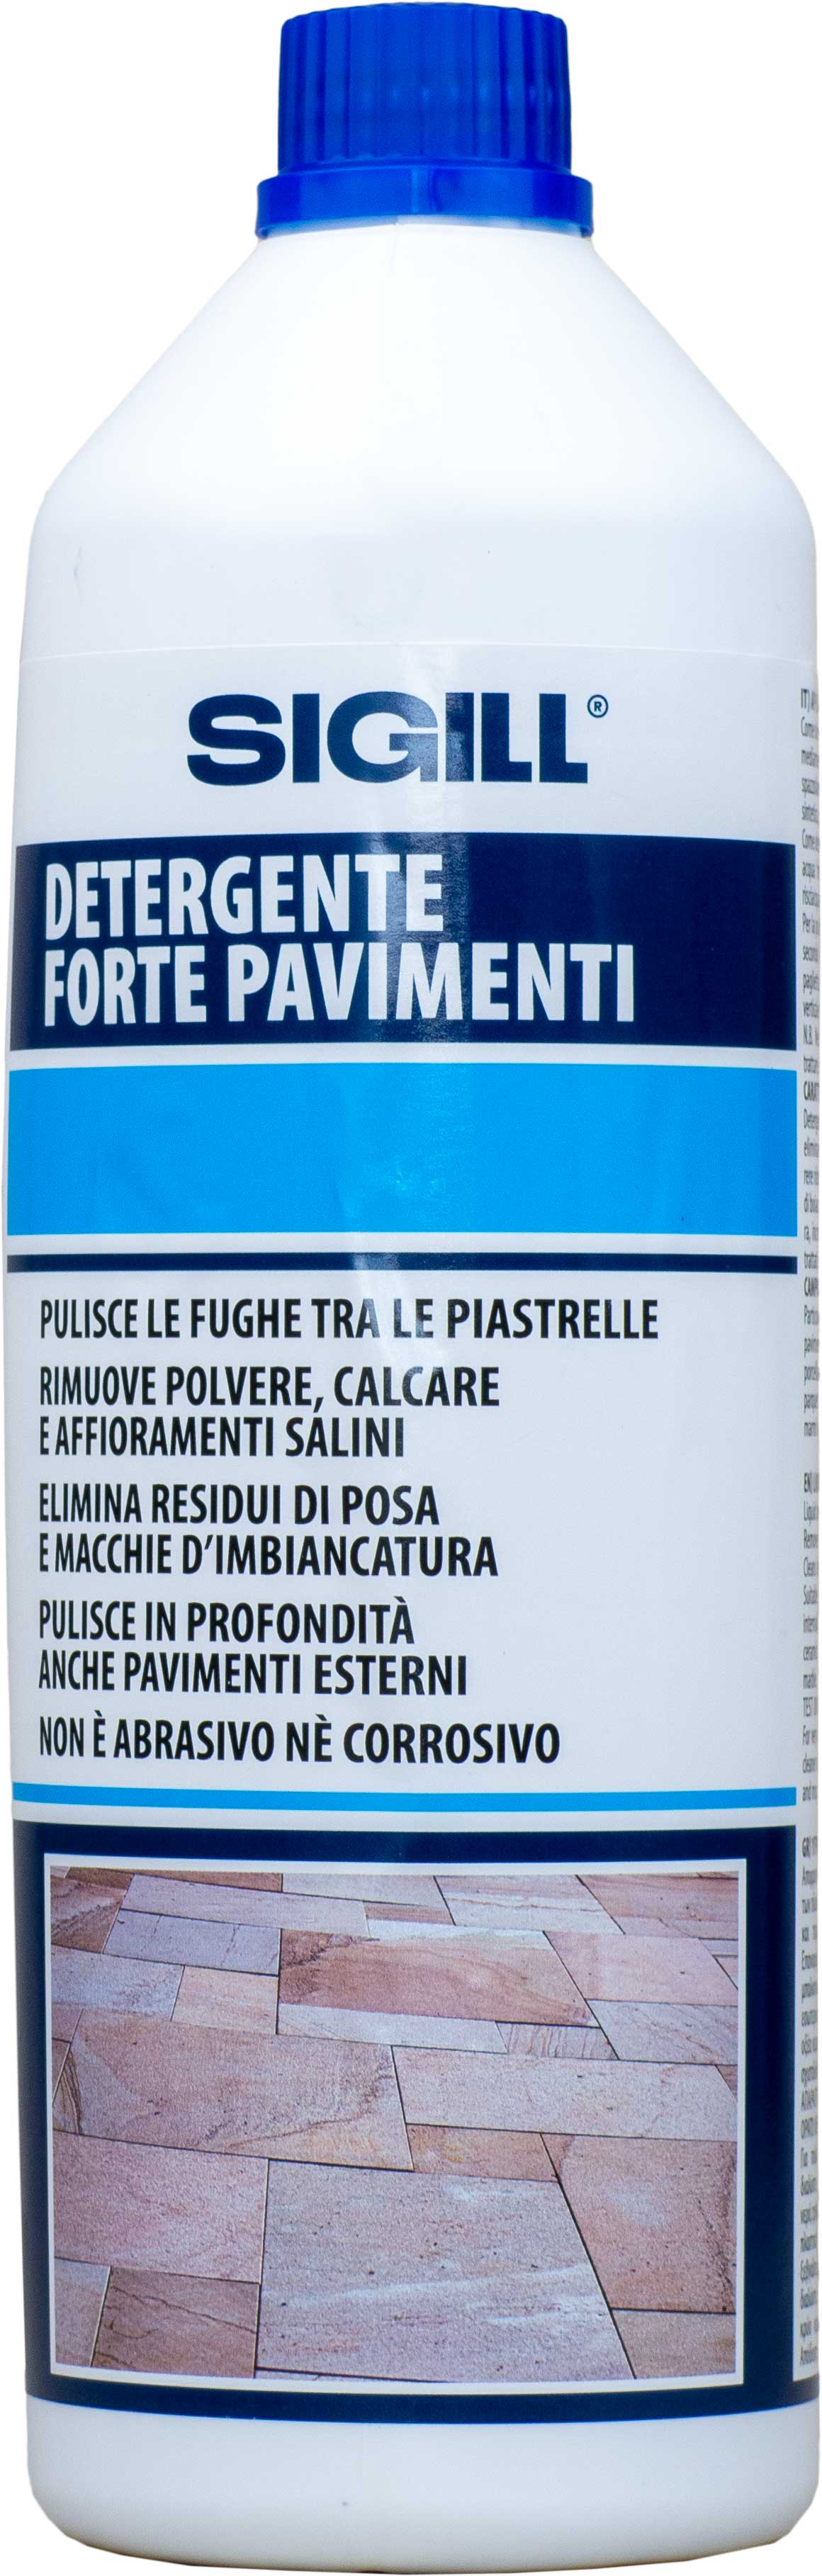 Detergente Forte Pavimenti - Sigill